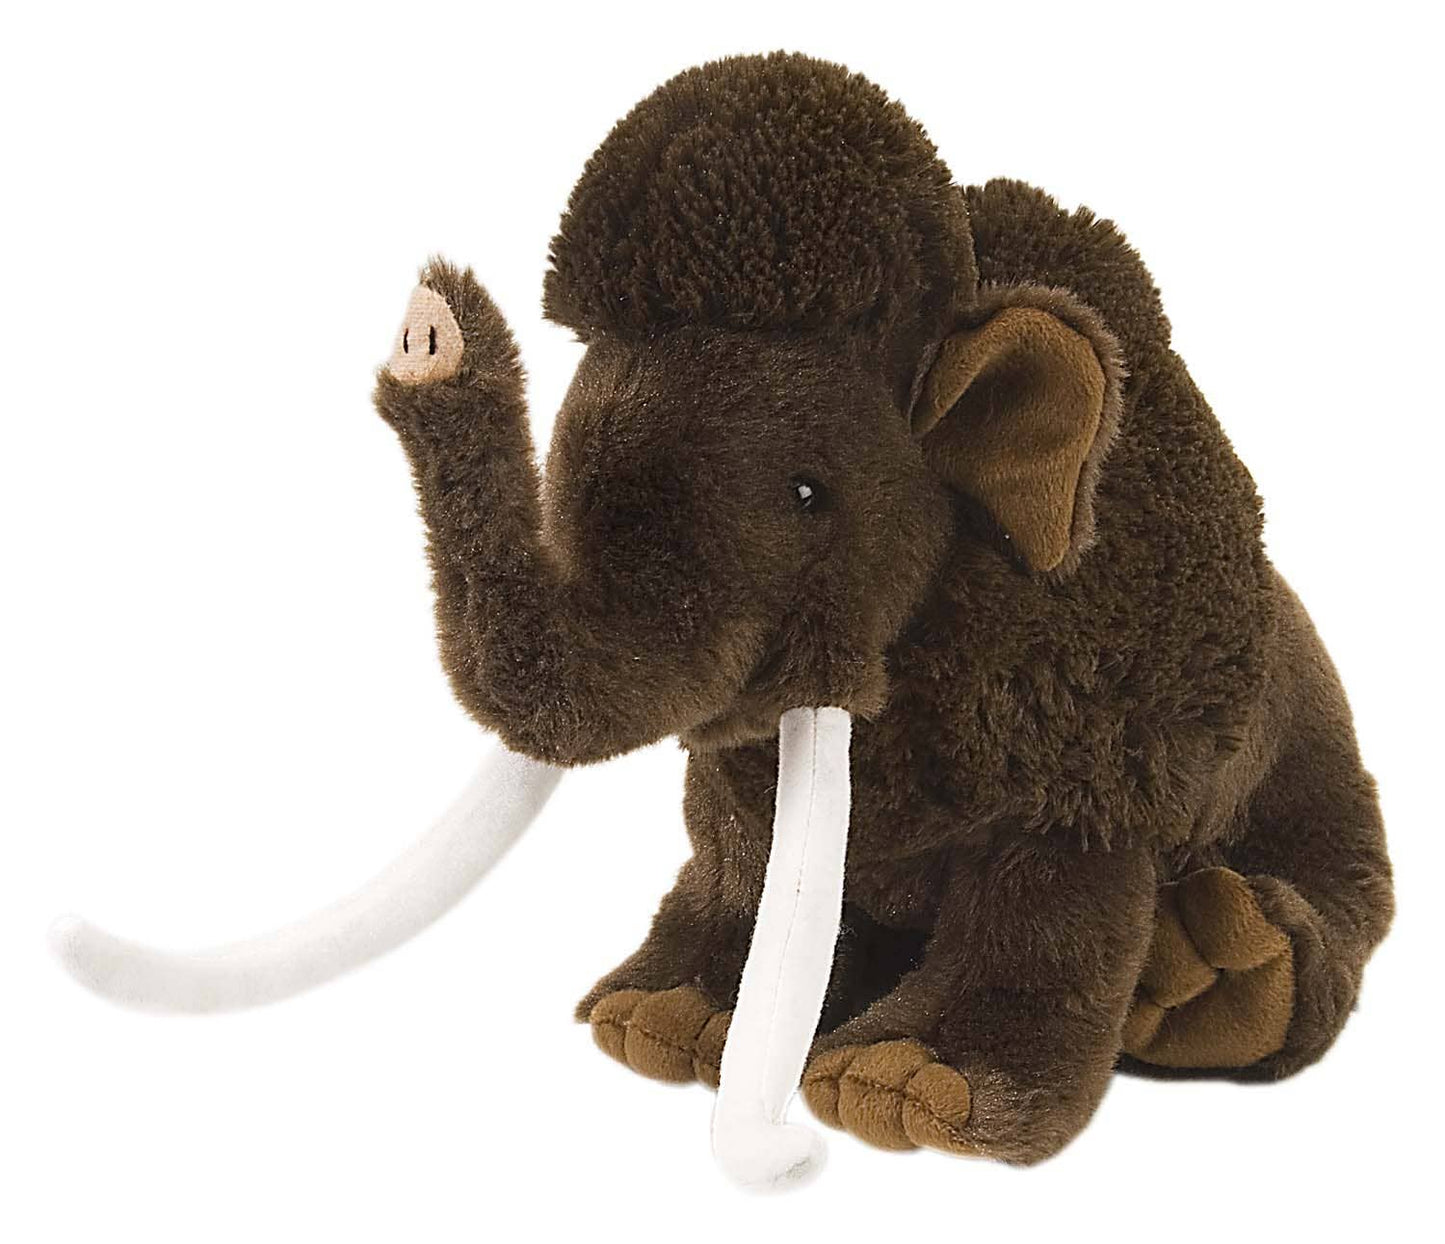 CK Woolly Mammoth Stuffed Animal 12"